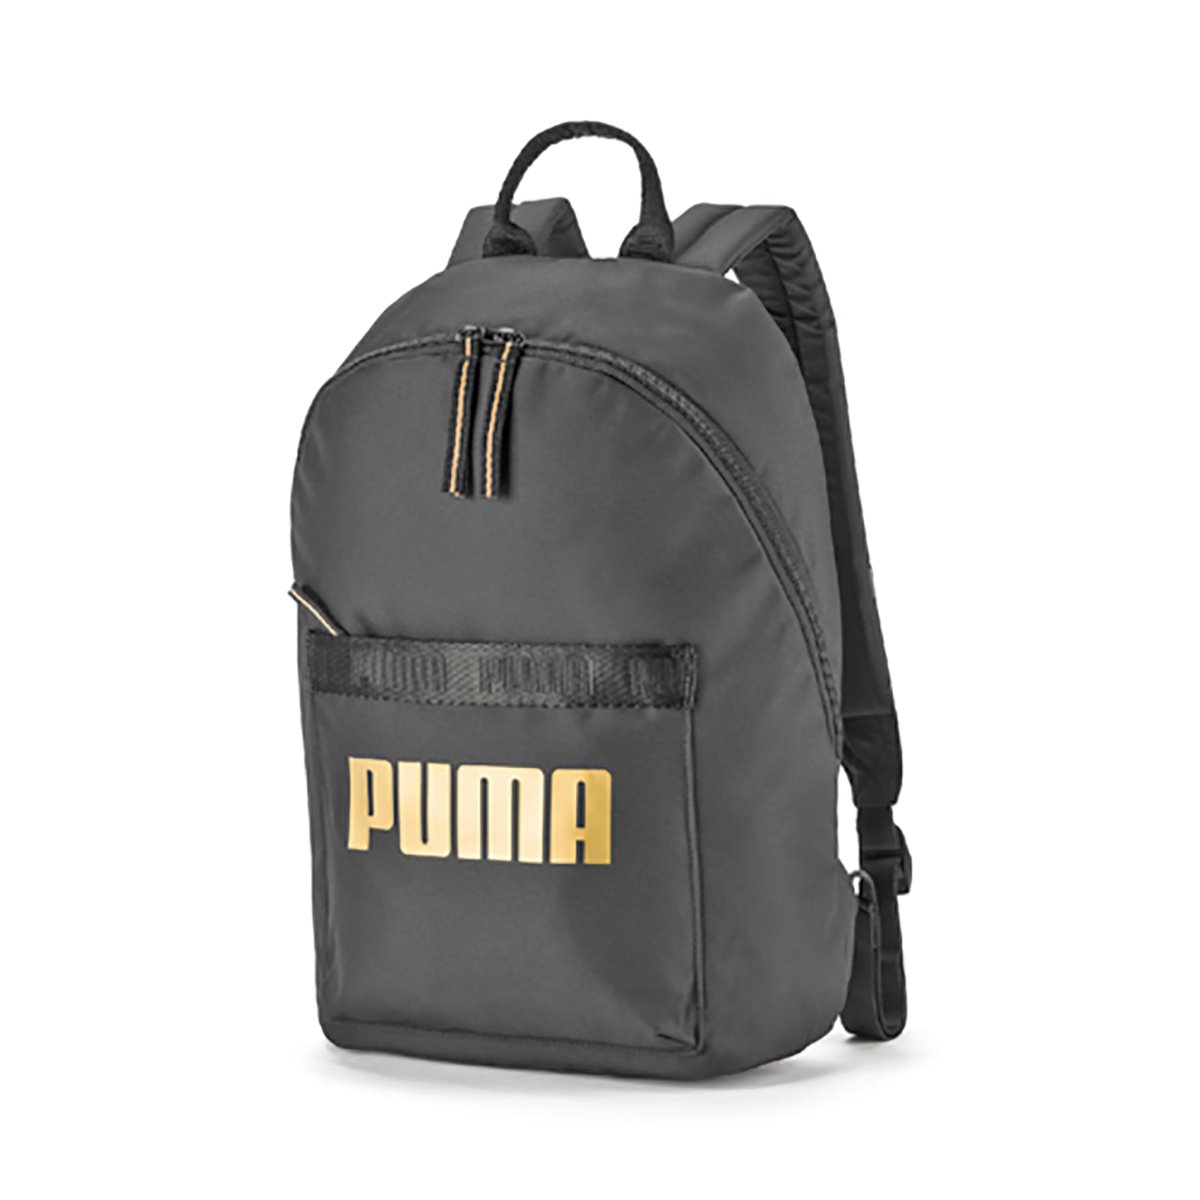 puma backpack black and gold